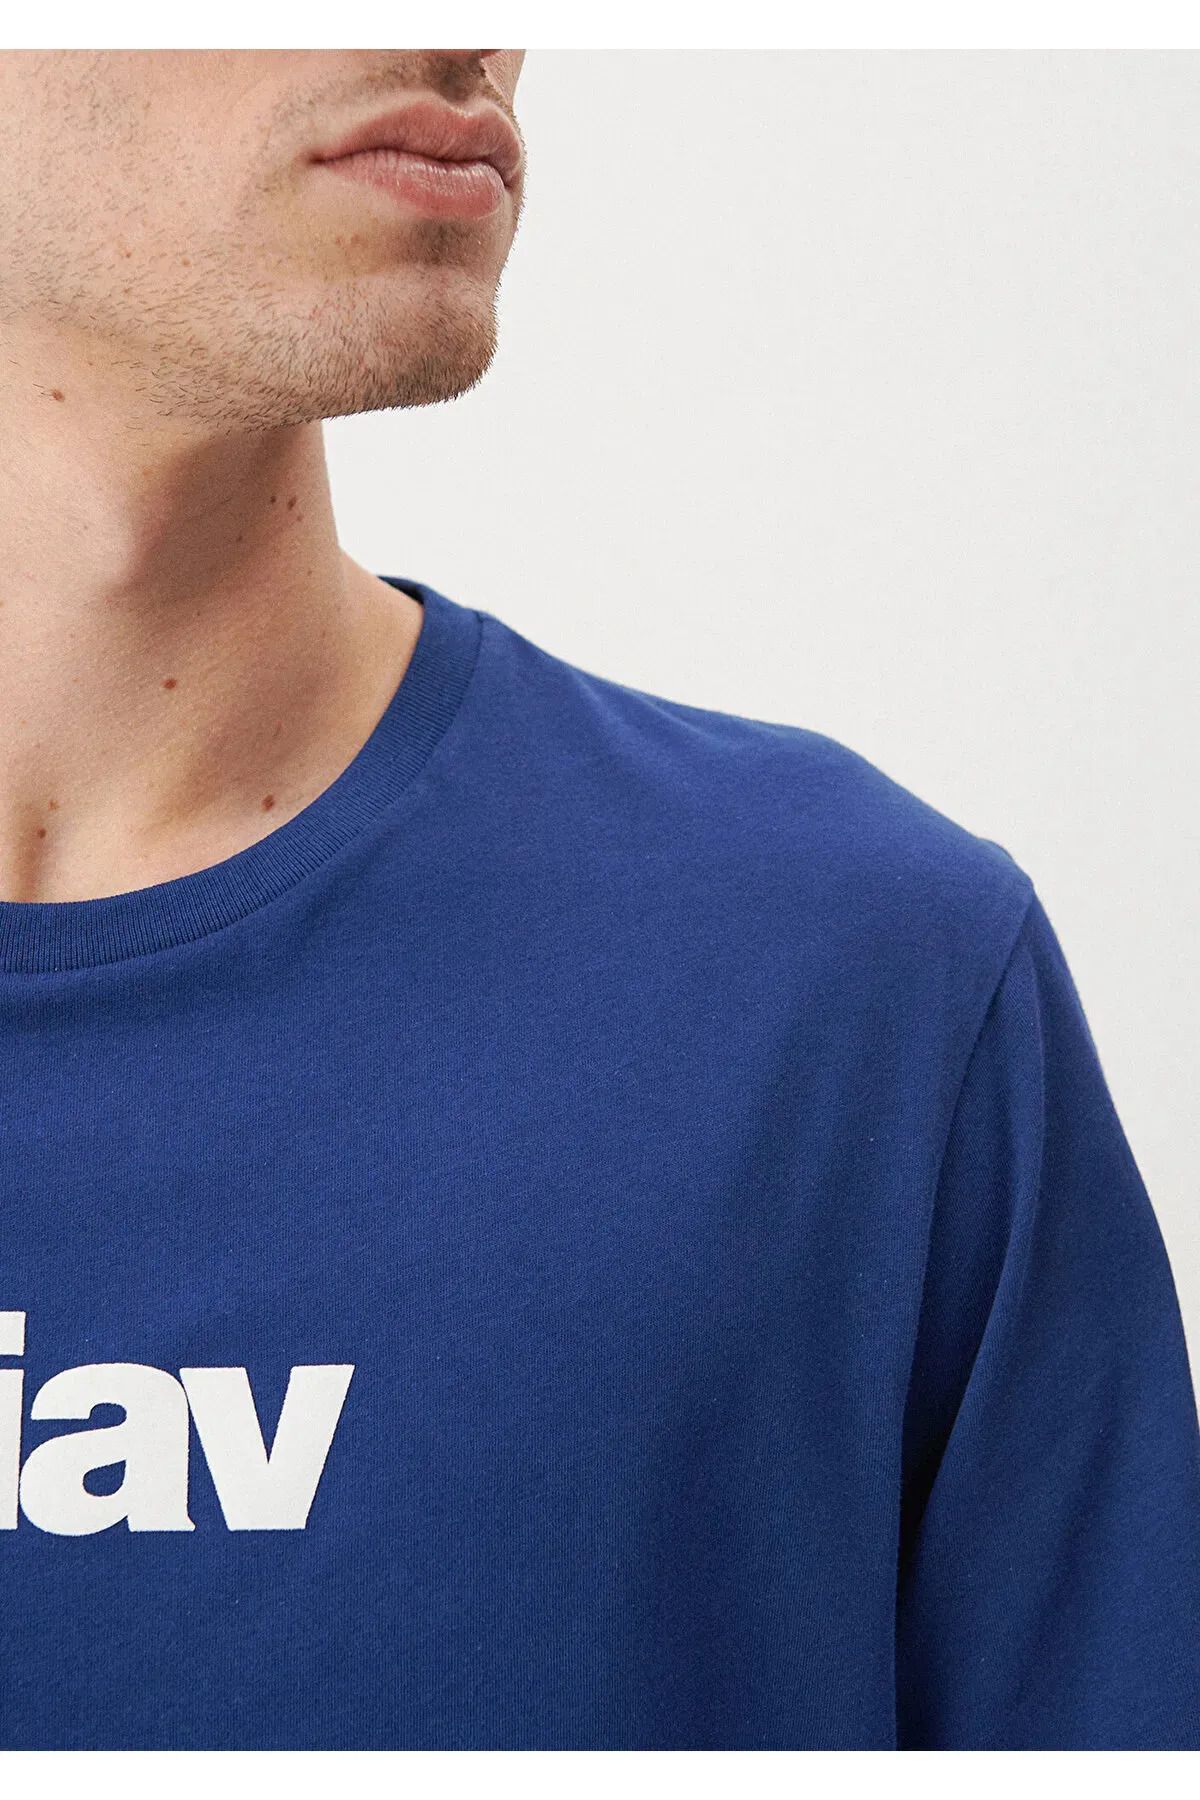 Mavi تی شرت آبی چاپ شده MIAV به طور منظم / برش معمولی 067153-602755